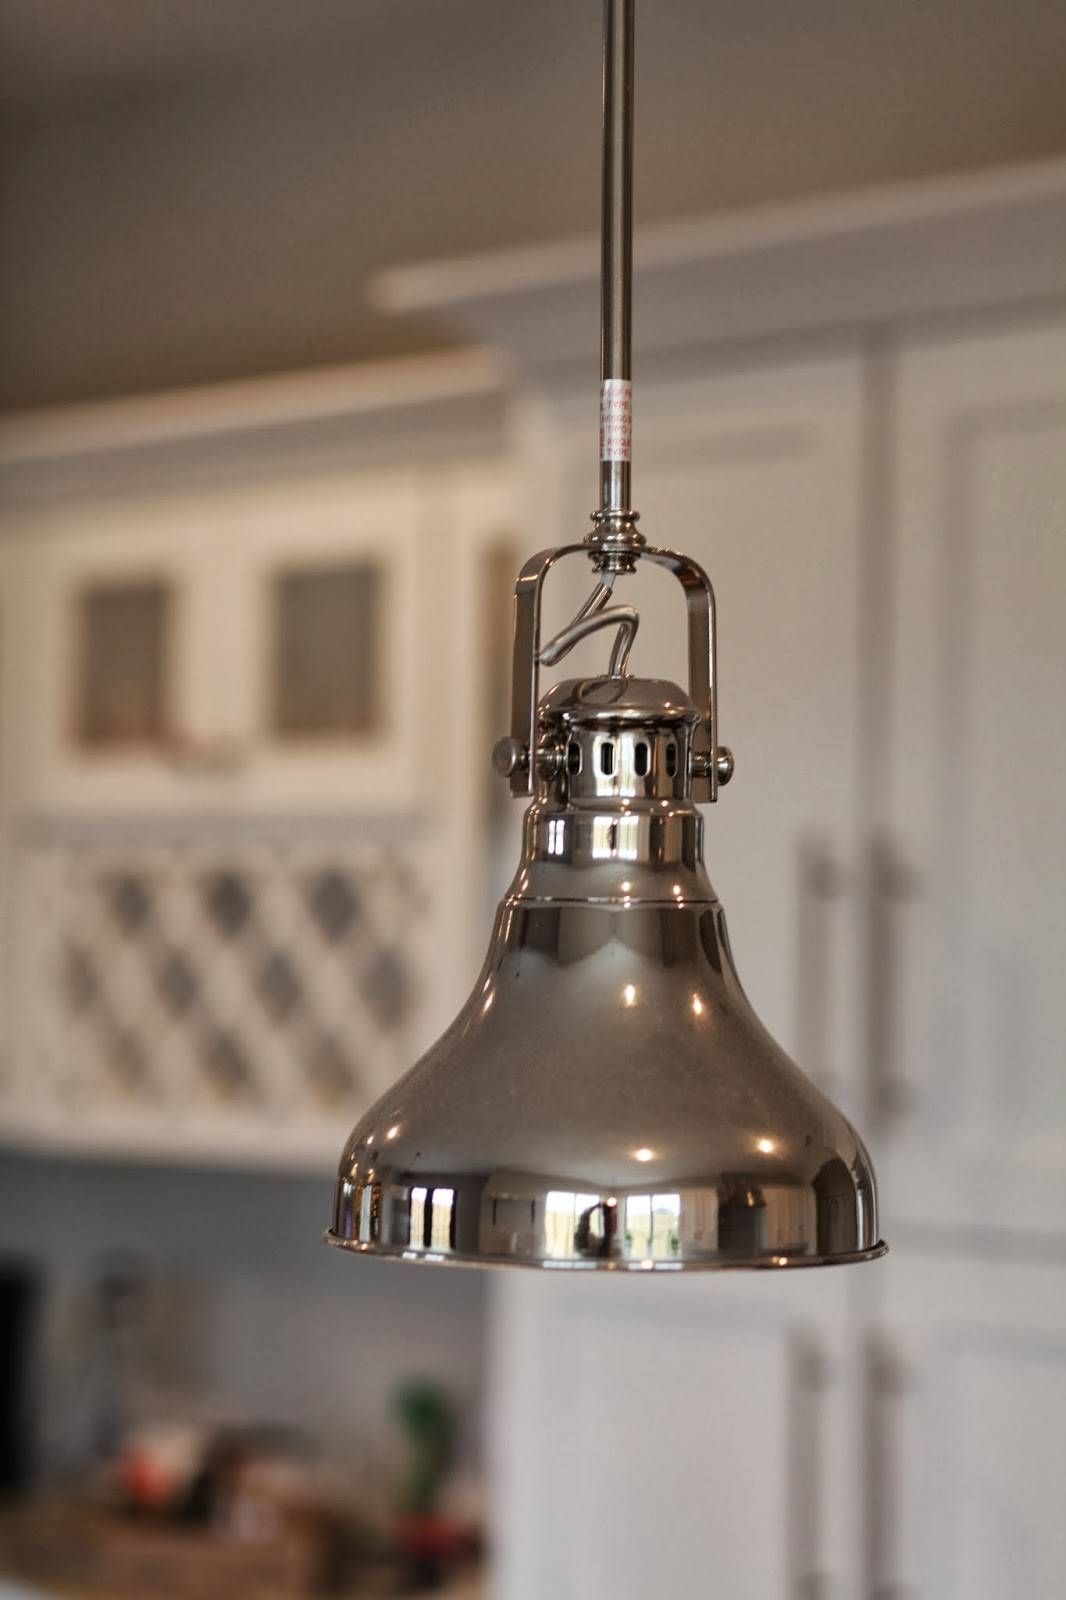 2020 Best of Home Depot Pendant Lights for Kitchen